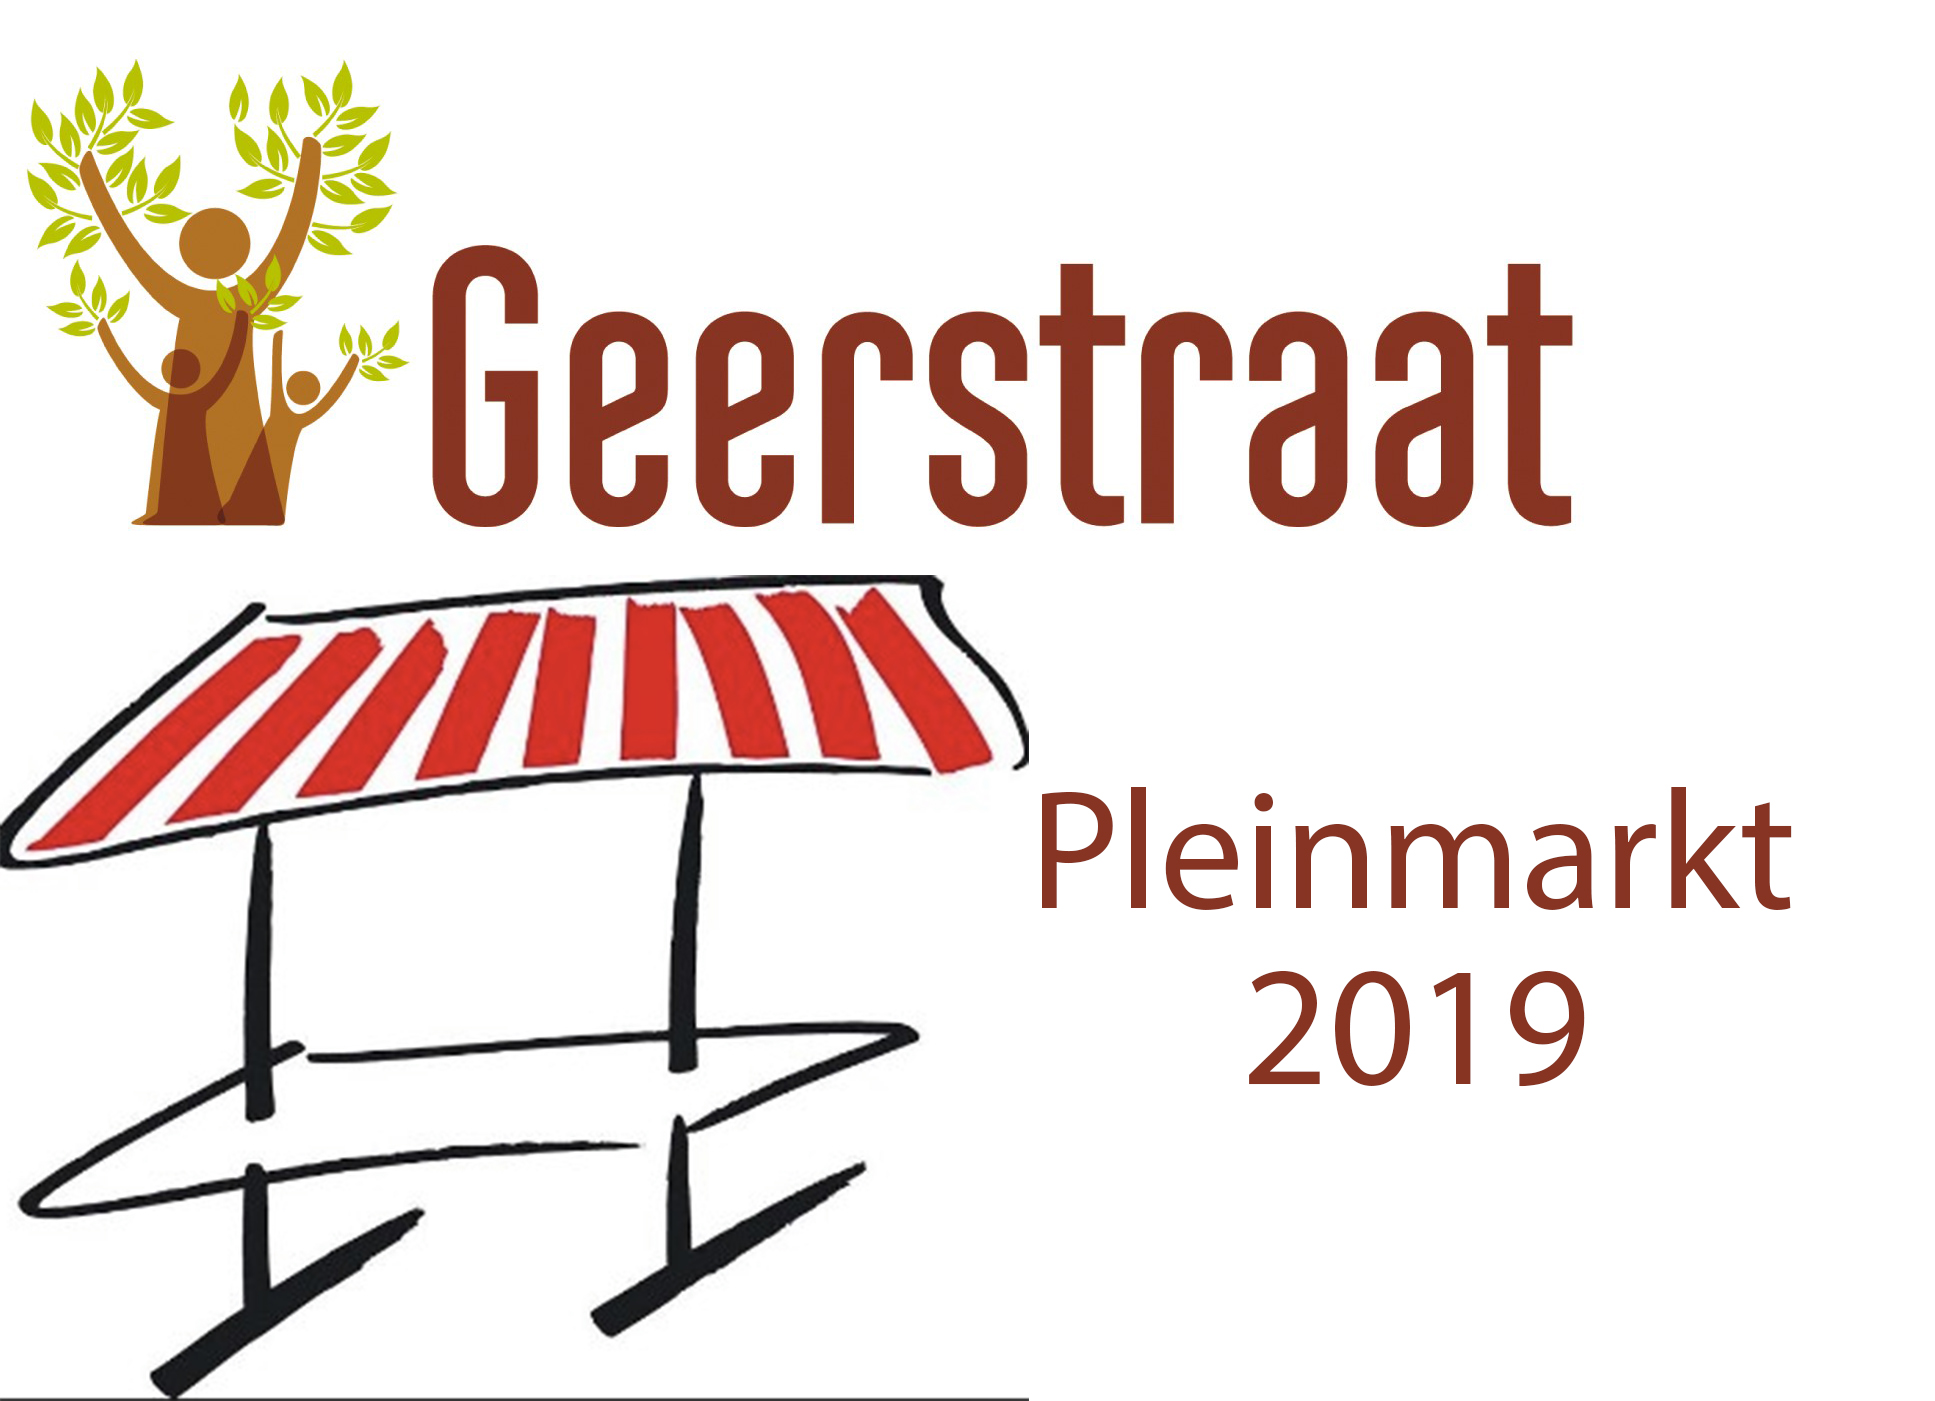 Pleinmarkt 2019 Geerstraat